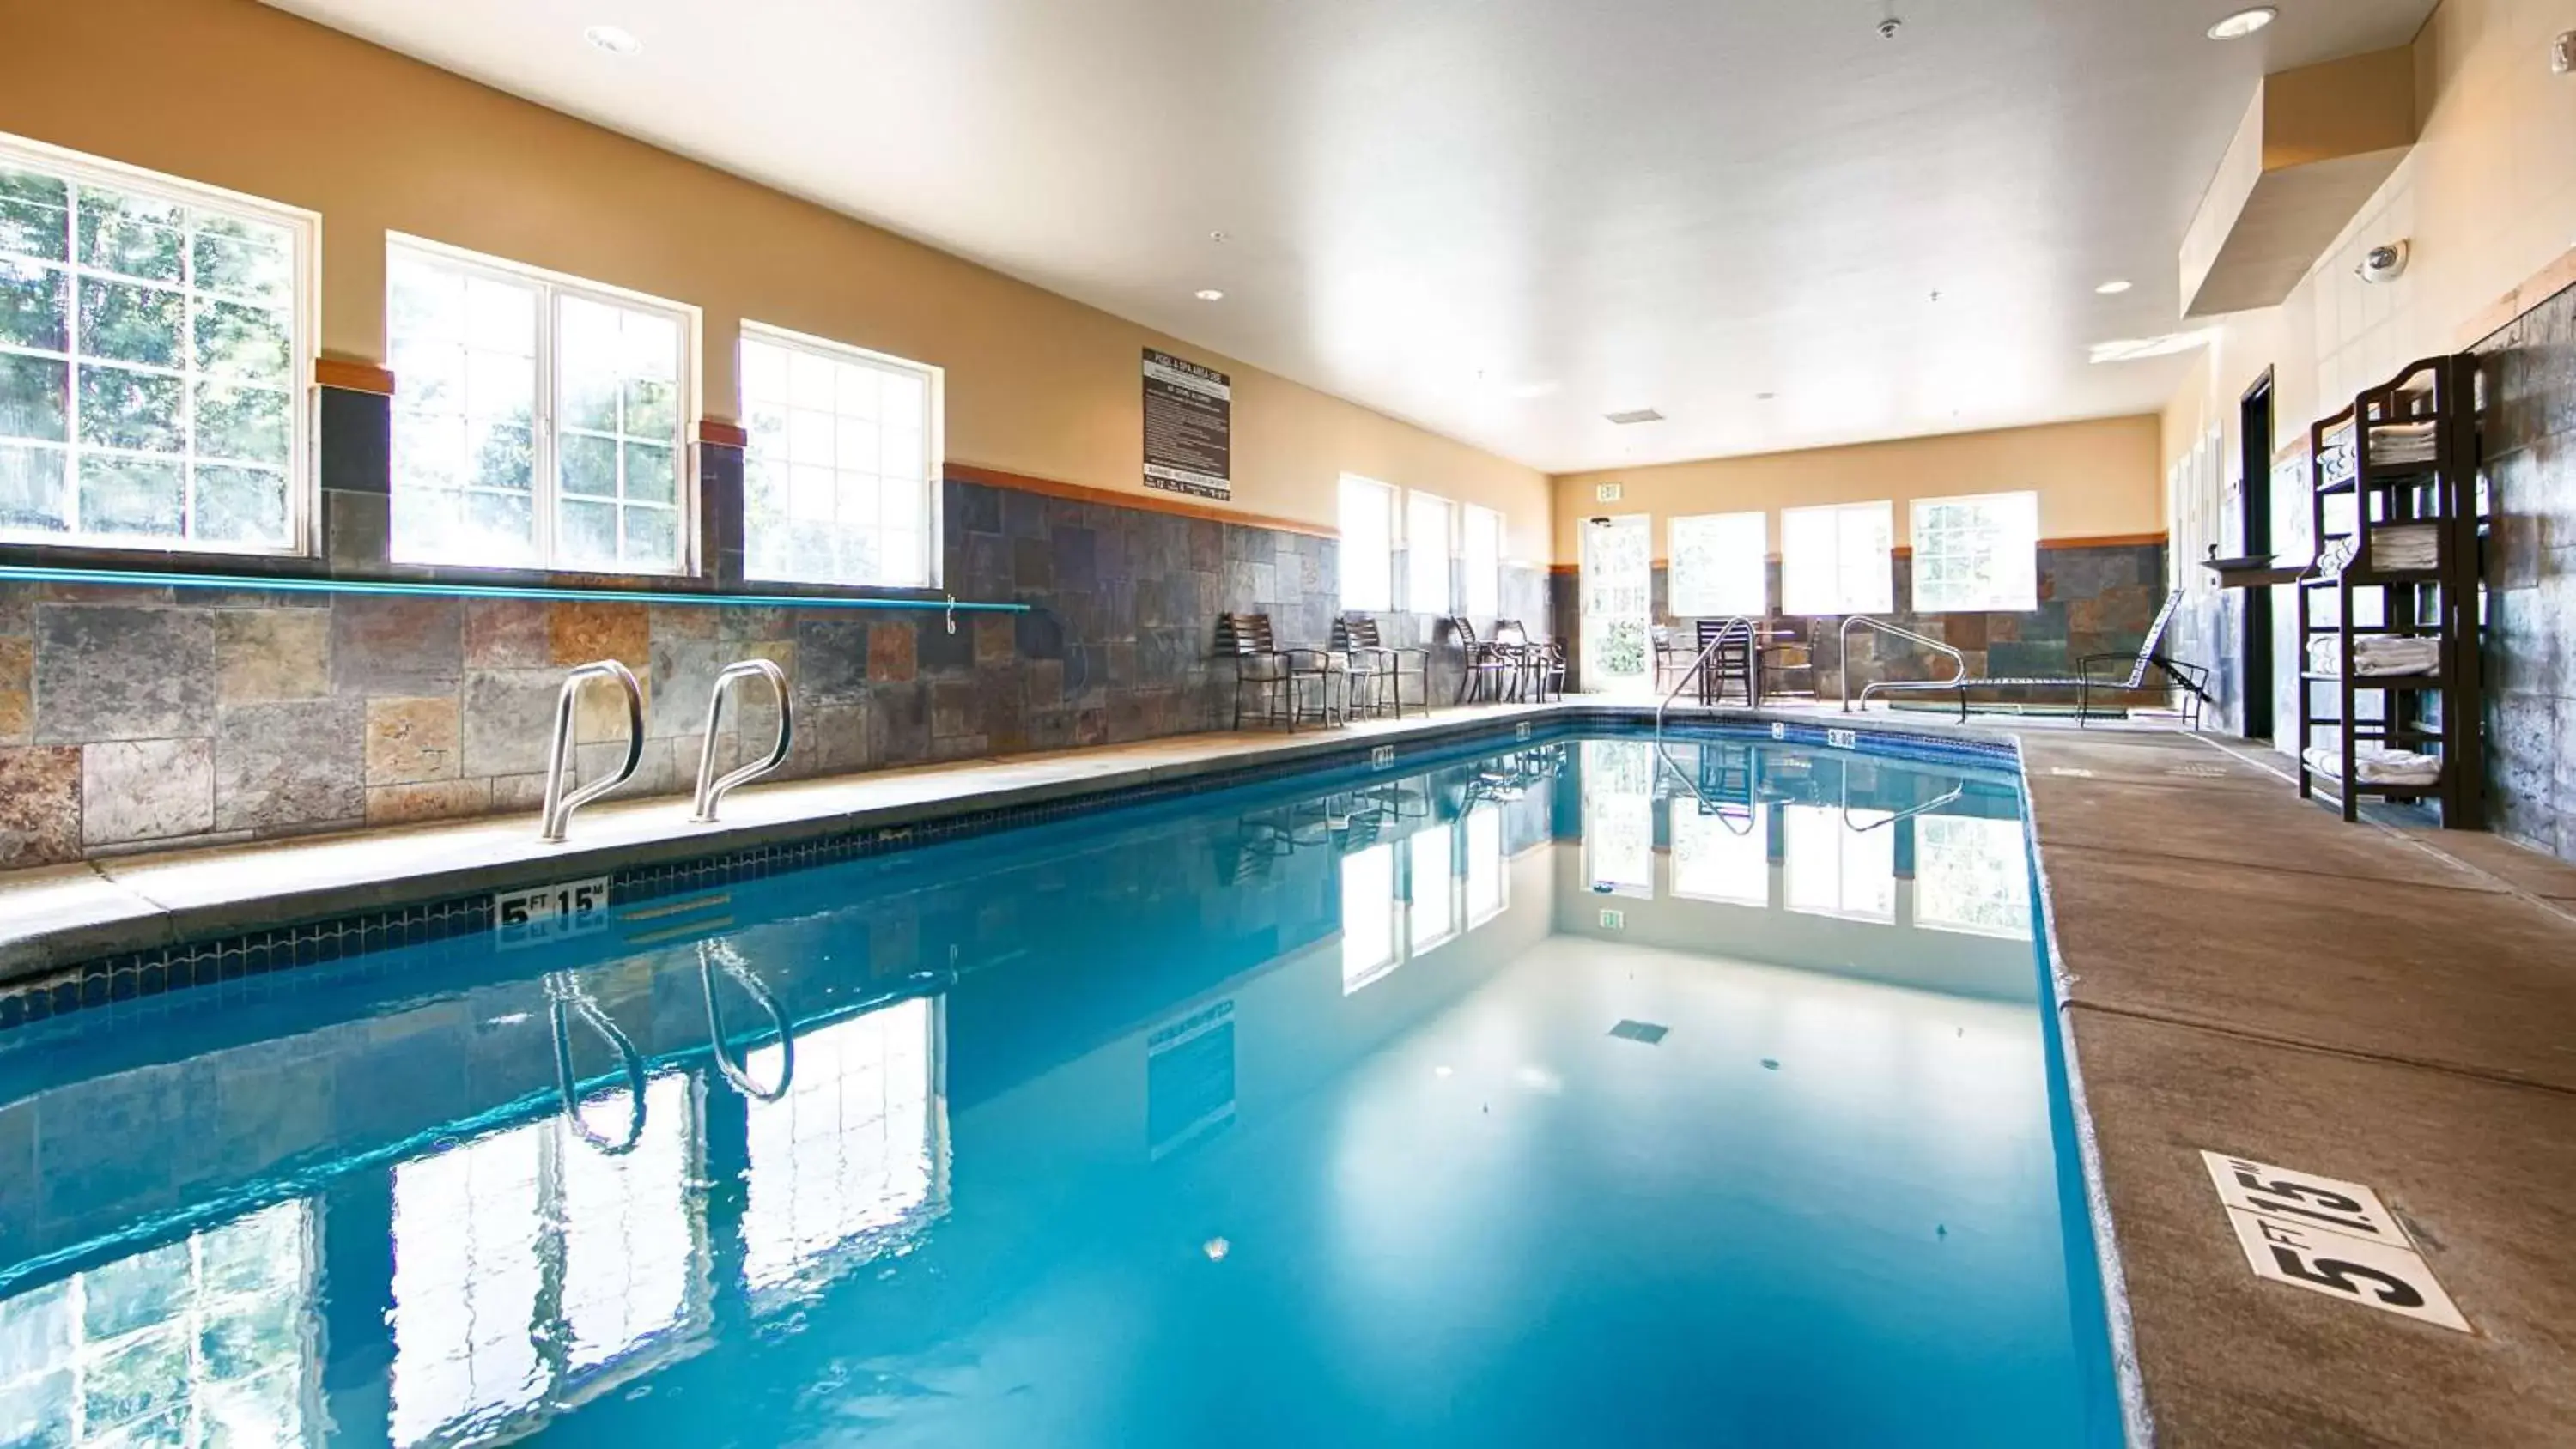 On site, Swimming Pool in Best Western Plus Yakima Hotel